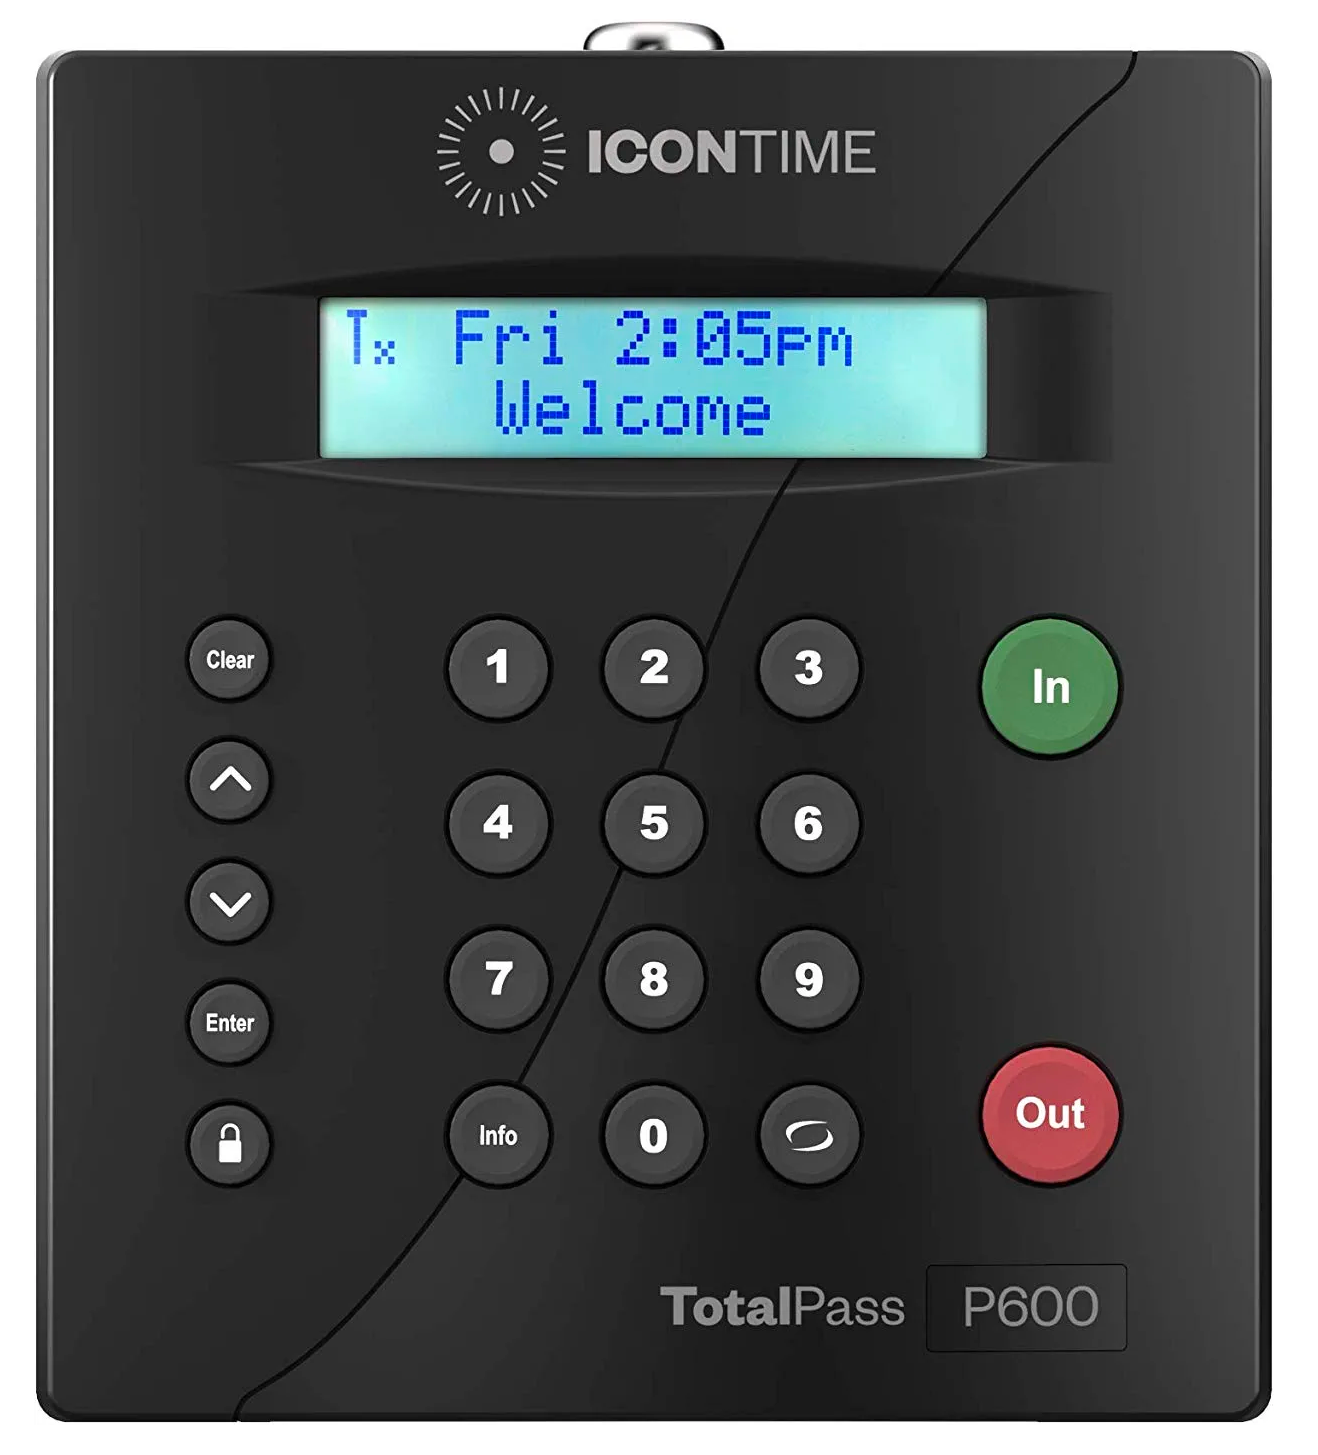 IconTime TotalPass P600 PIN Proximity Time Clock